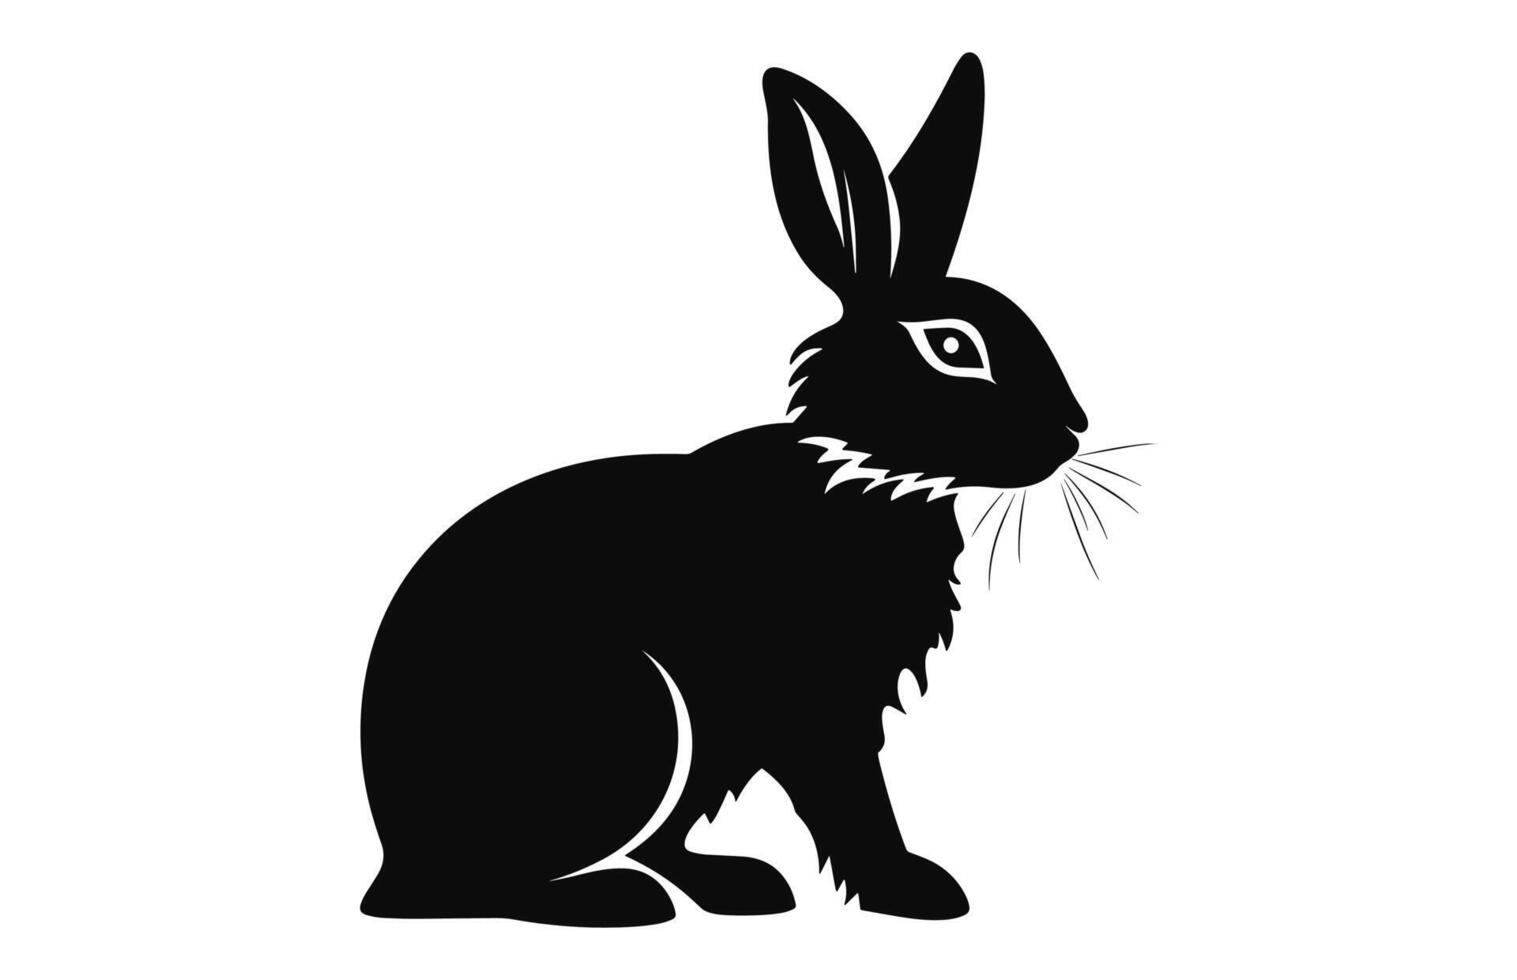 un Conejo silueta vector, Pascua de Resurrección conejito negro clipart vector